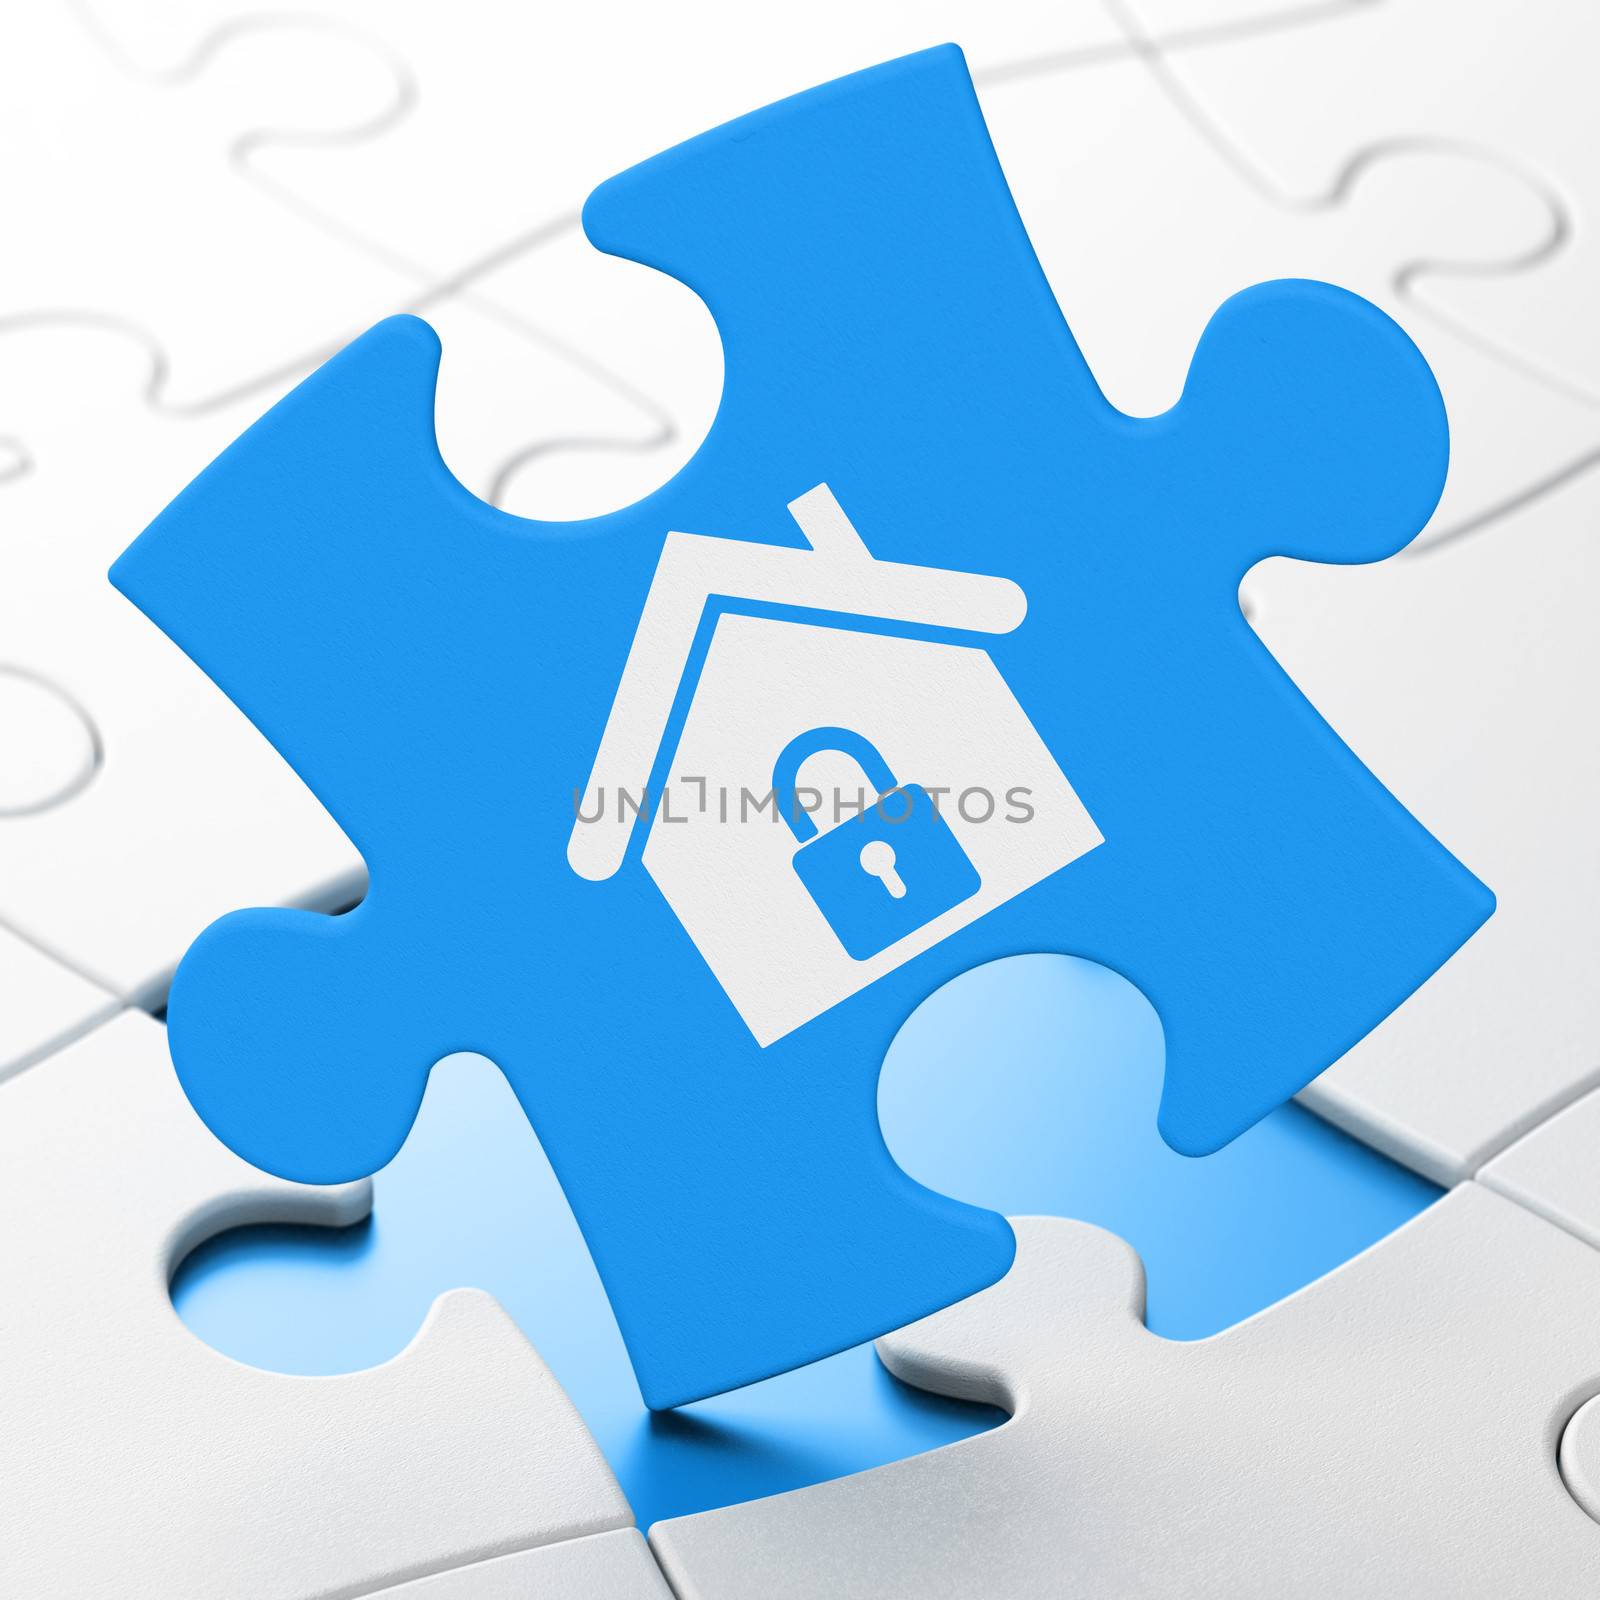 Finance concept: Home on Blue puzzle pieces background, 3d render